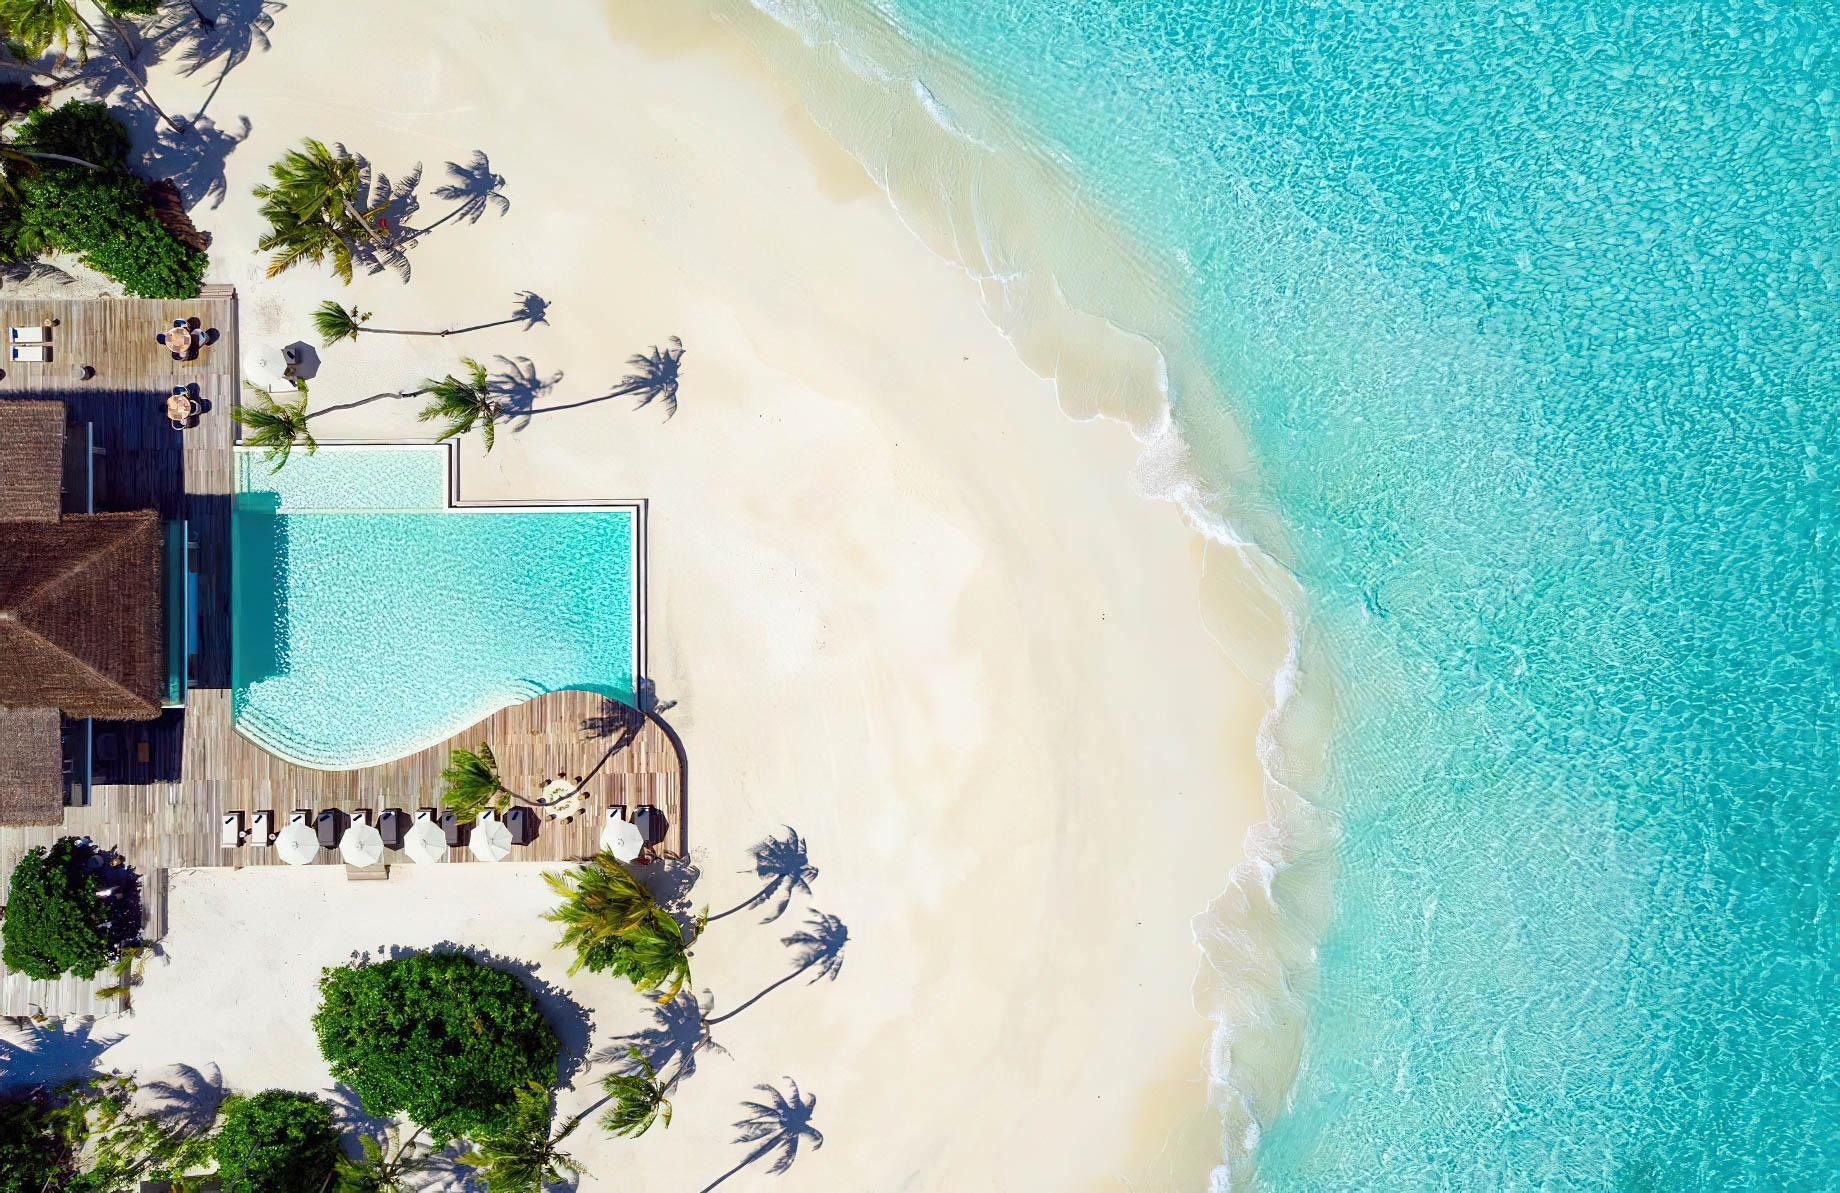 Baglioni Resort Maldives - Maagau Island, Rinbudhoo, Maldives - Resort Main Pool Overhead Aerial View